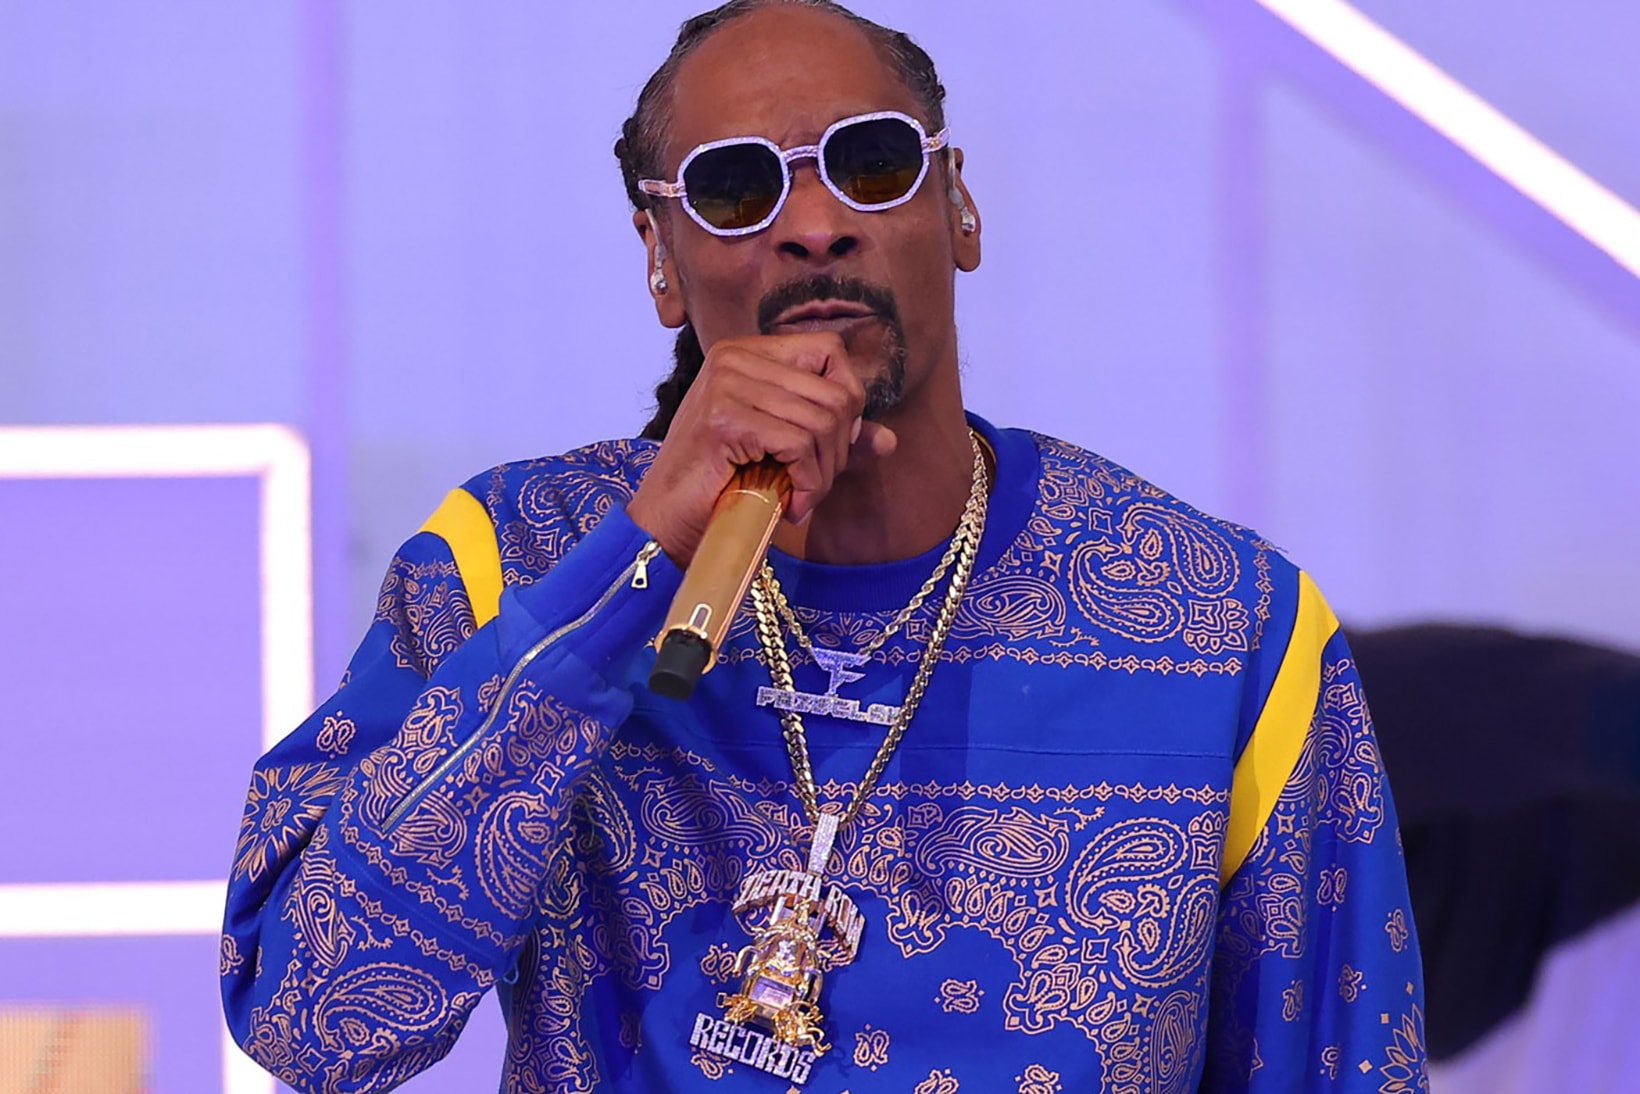 Snoop Dogg NFT Death Row Records Label Rapper Super Bowl Halftime Show Performance 